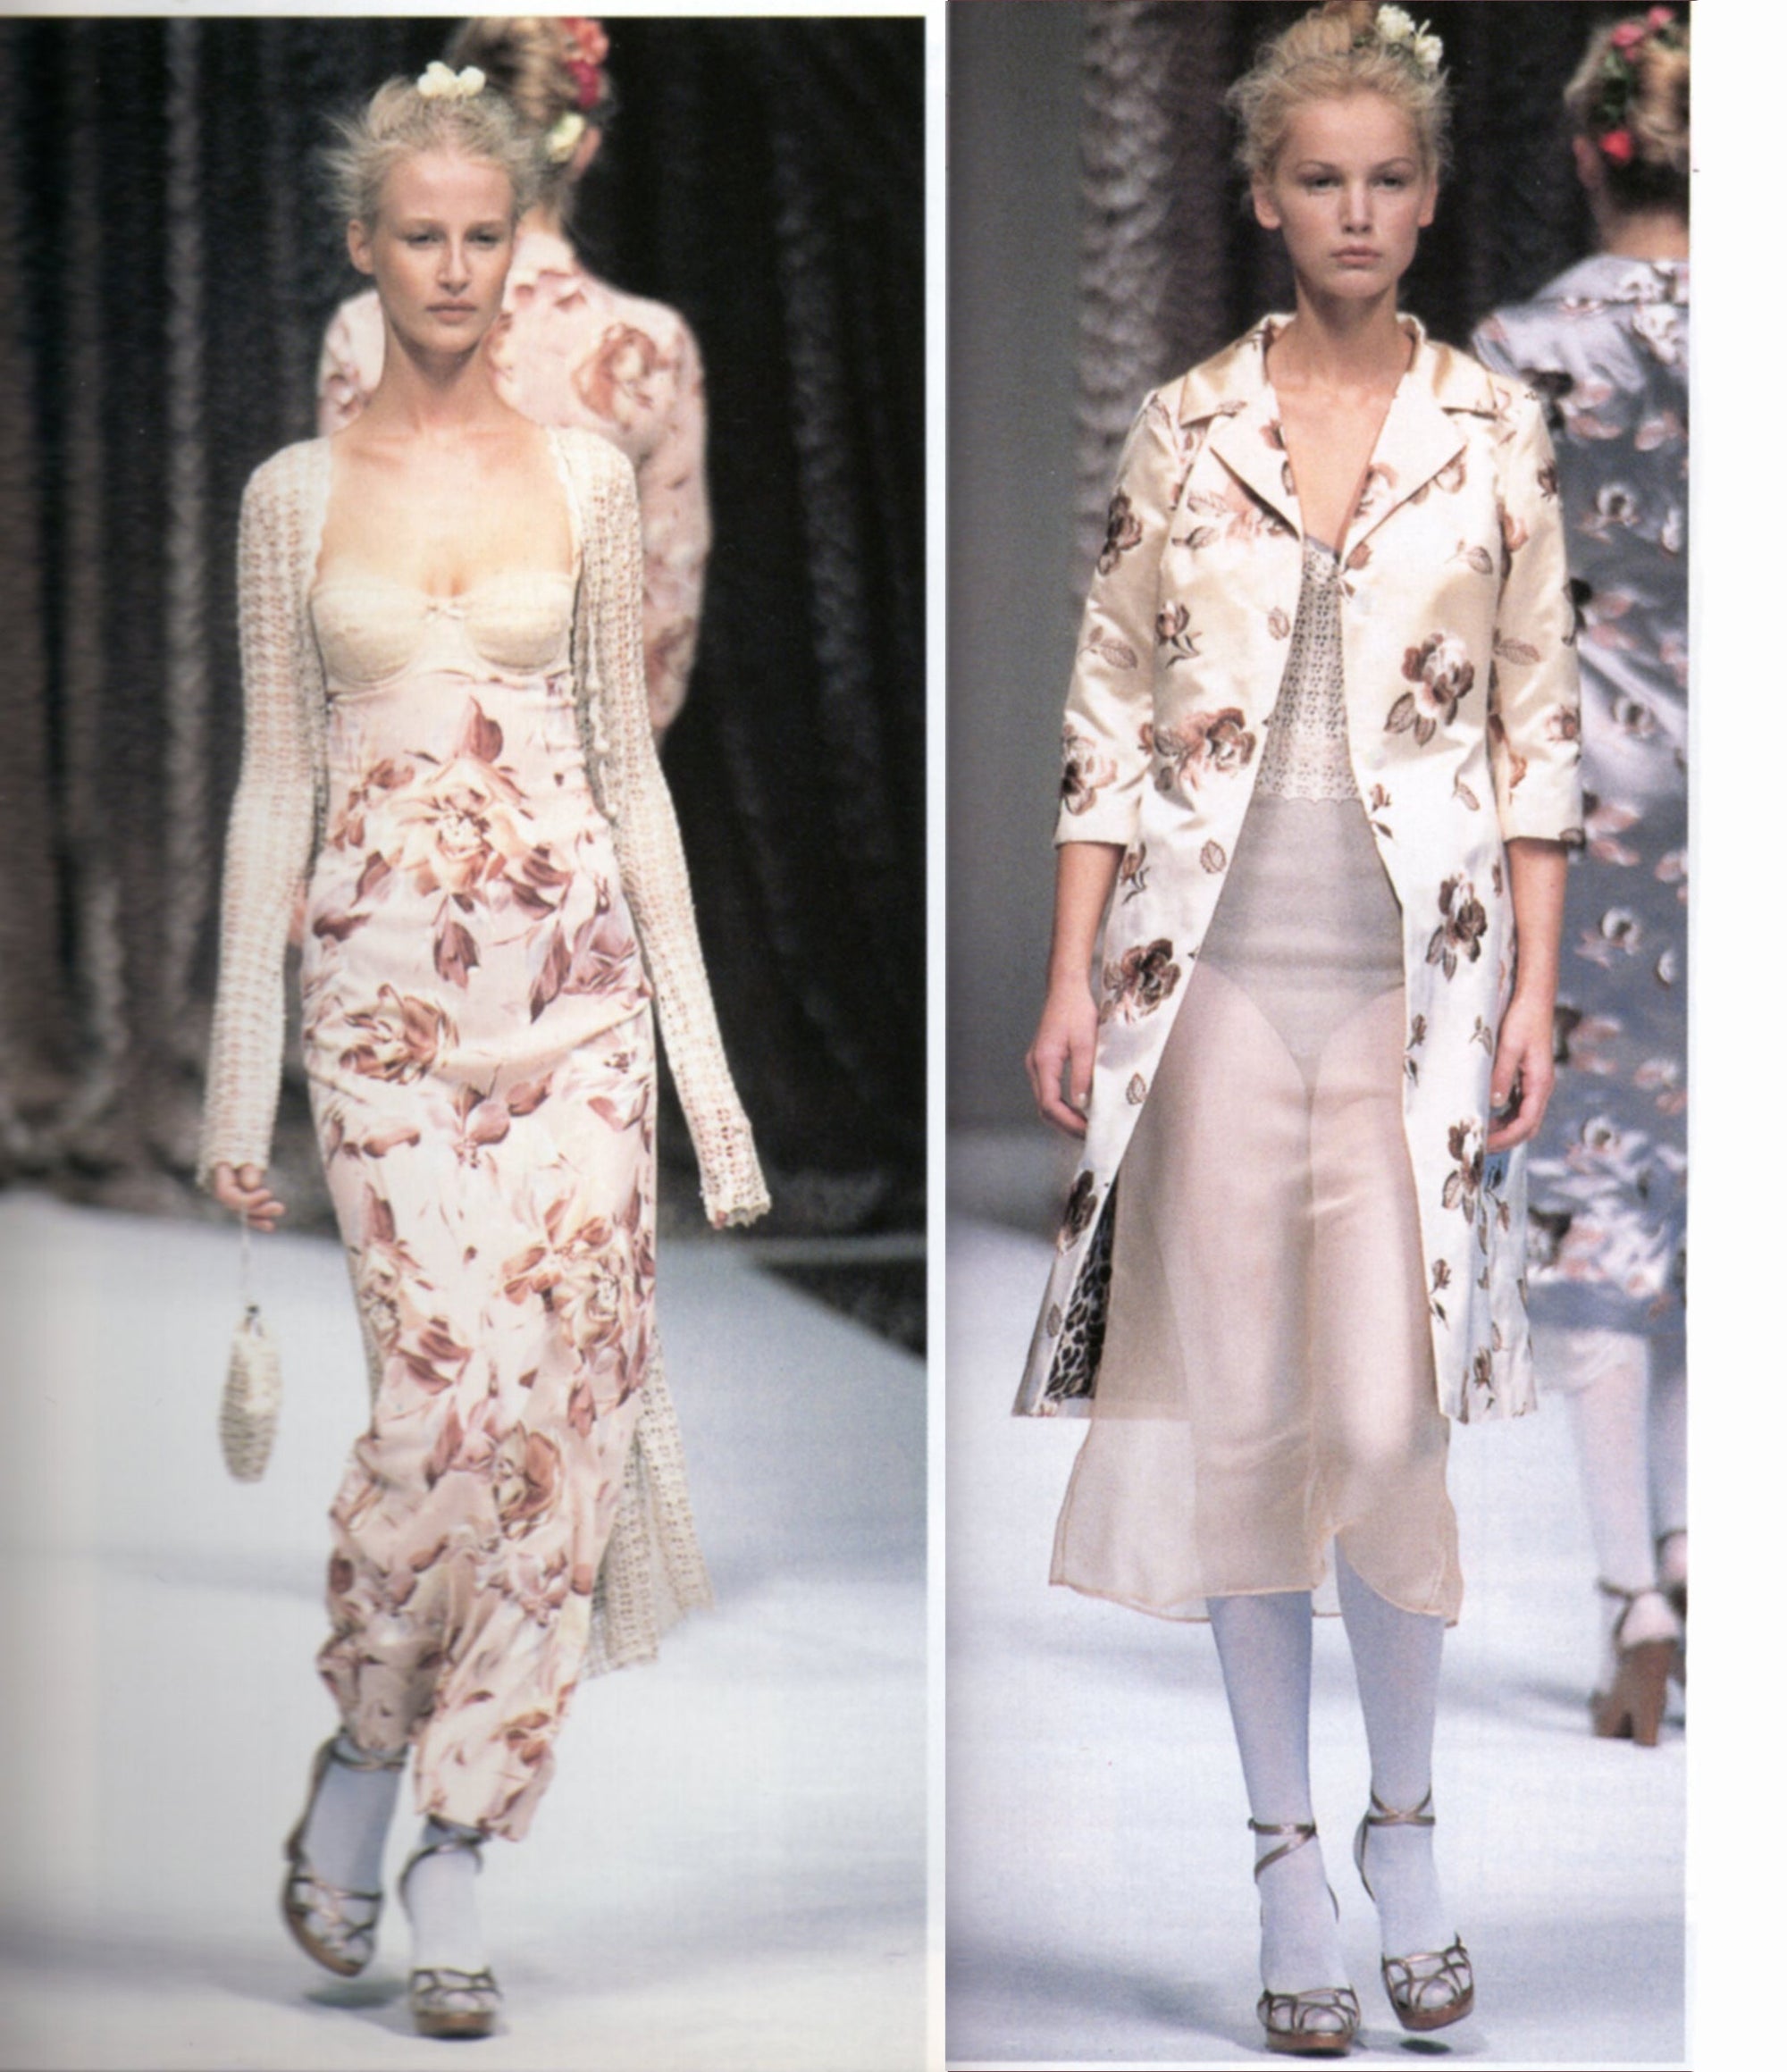 Dolce &amp; Gabbana 1997 Floral Velvet Heels